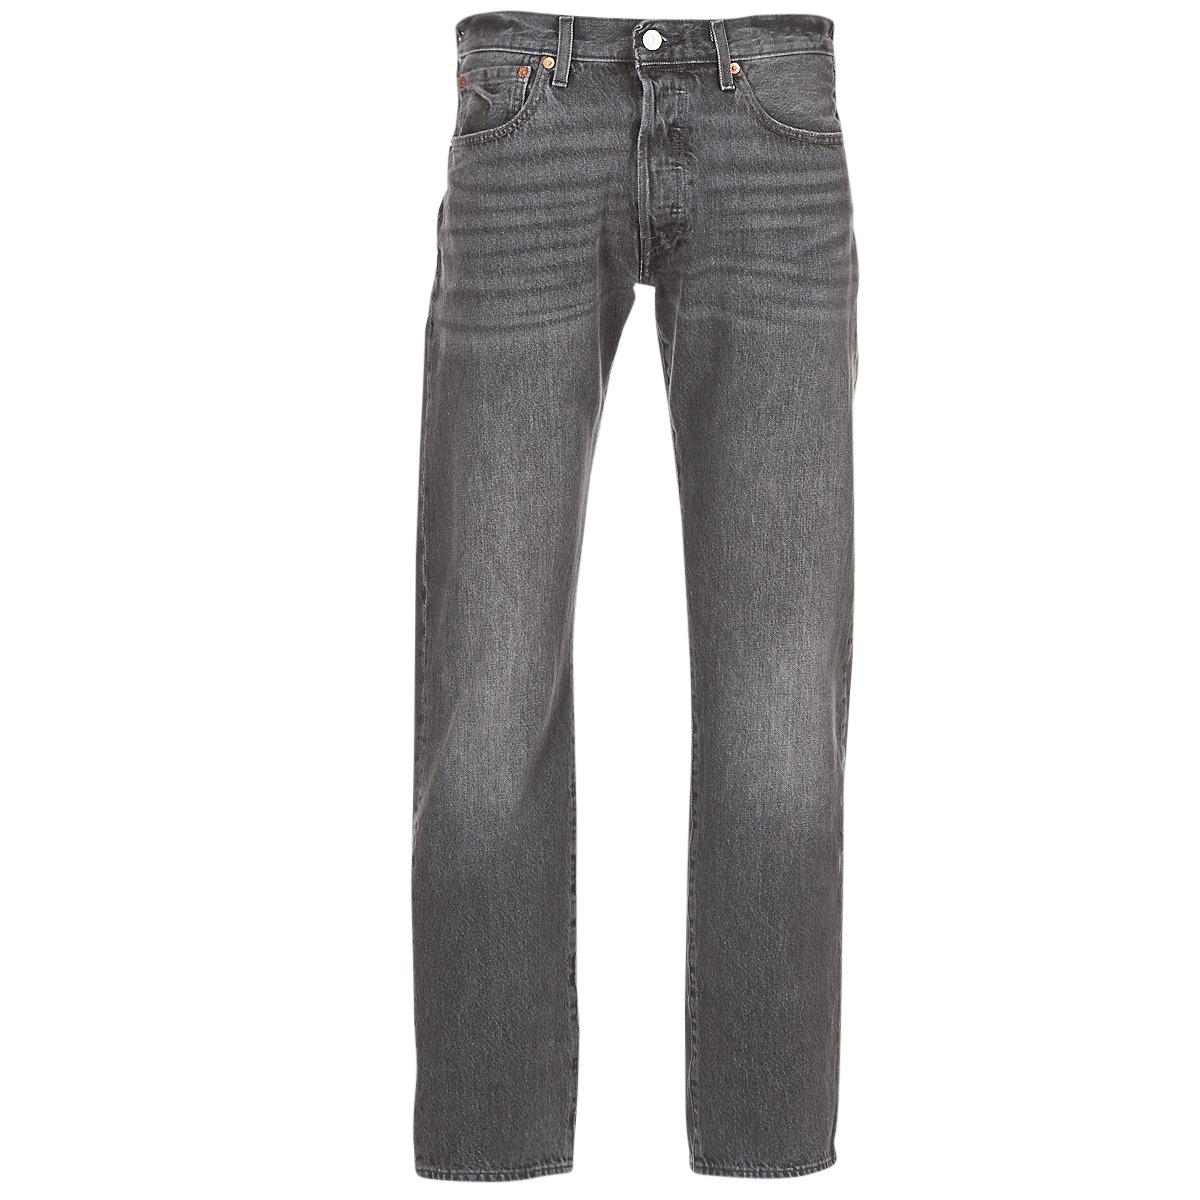 Levi's Denim 501 Levi's Original Fit Jeans in Grey (Grey) for Men - Lyst